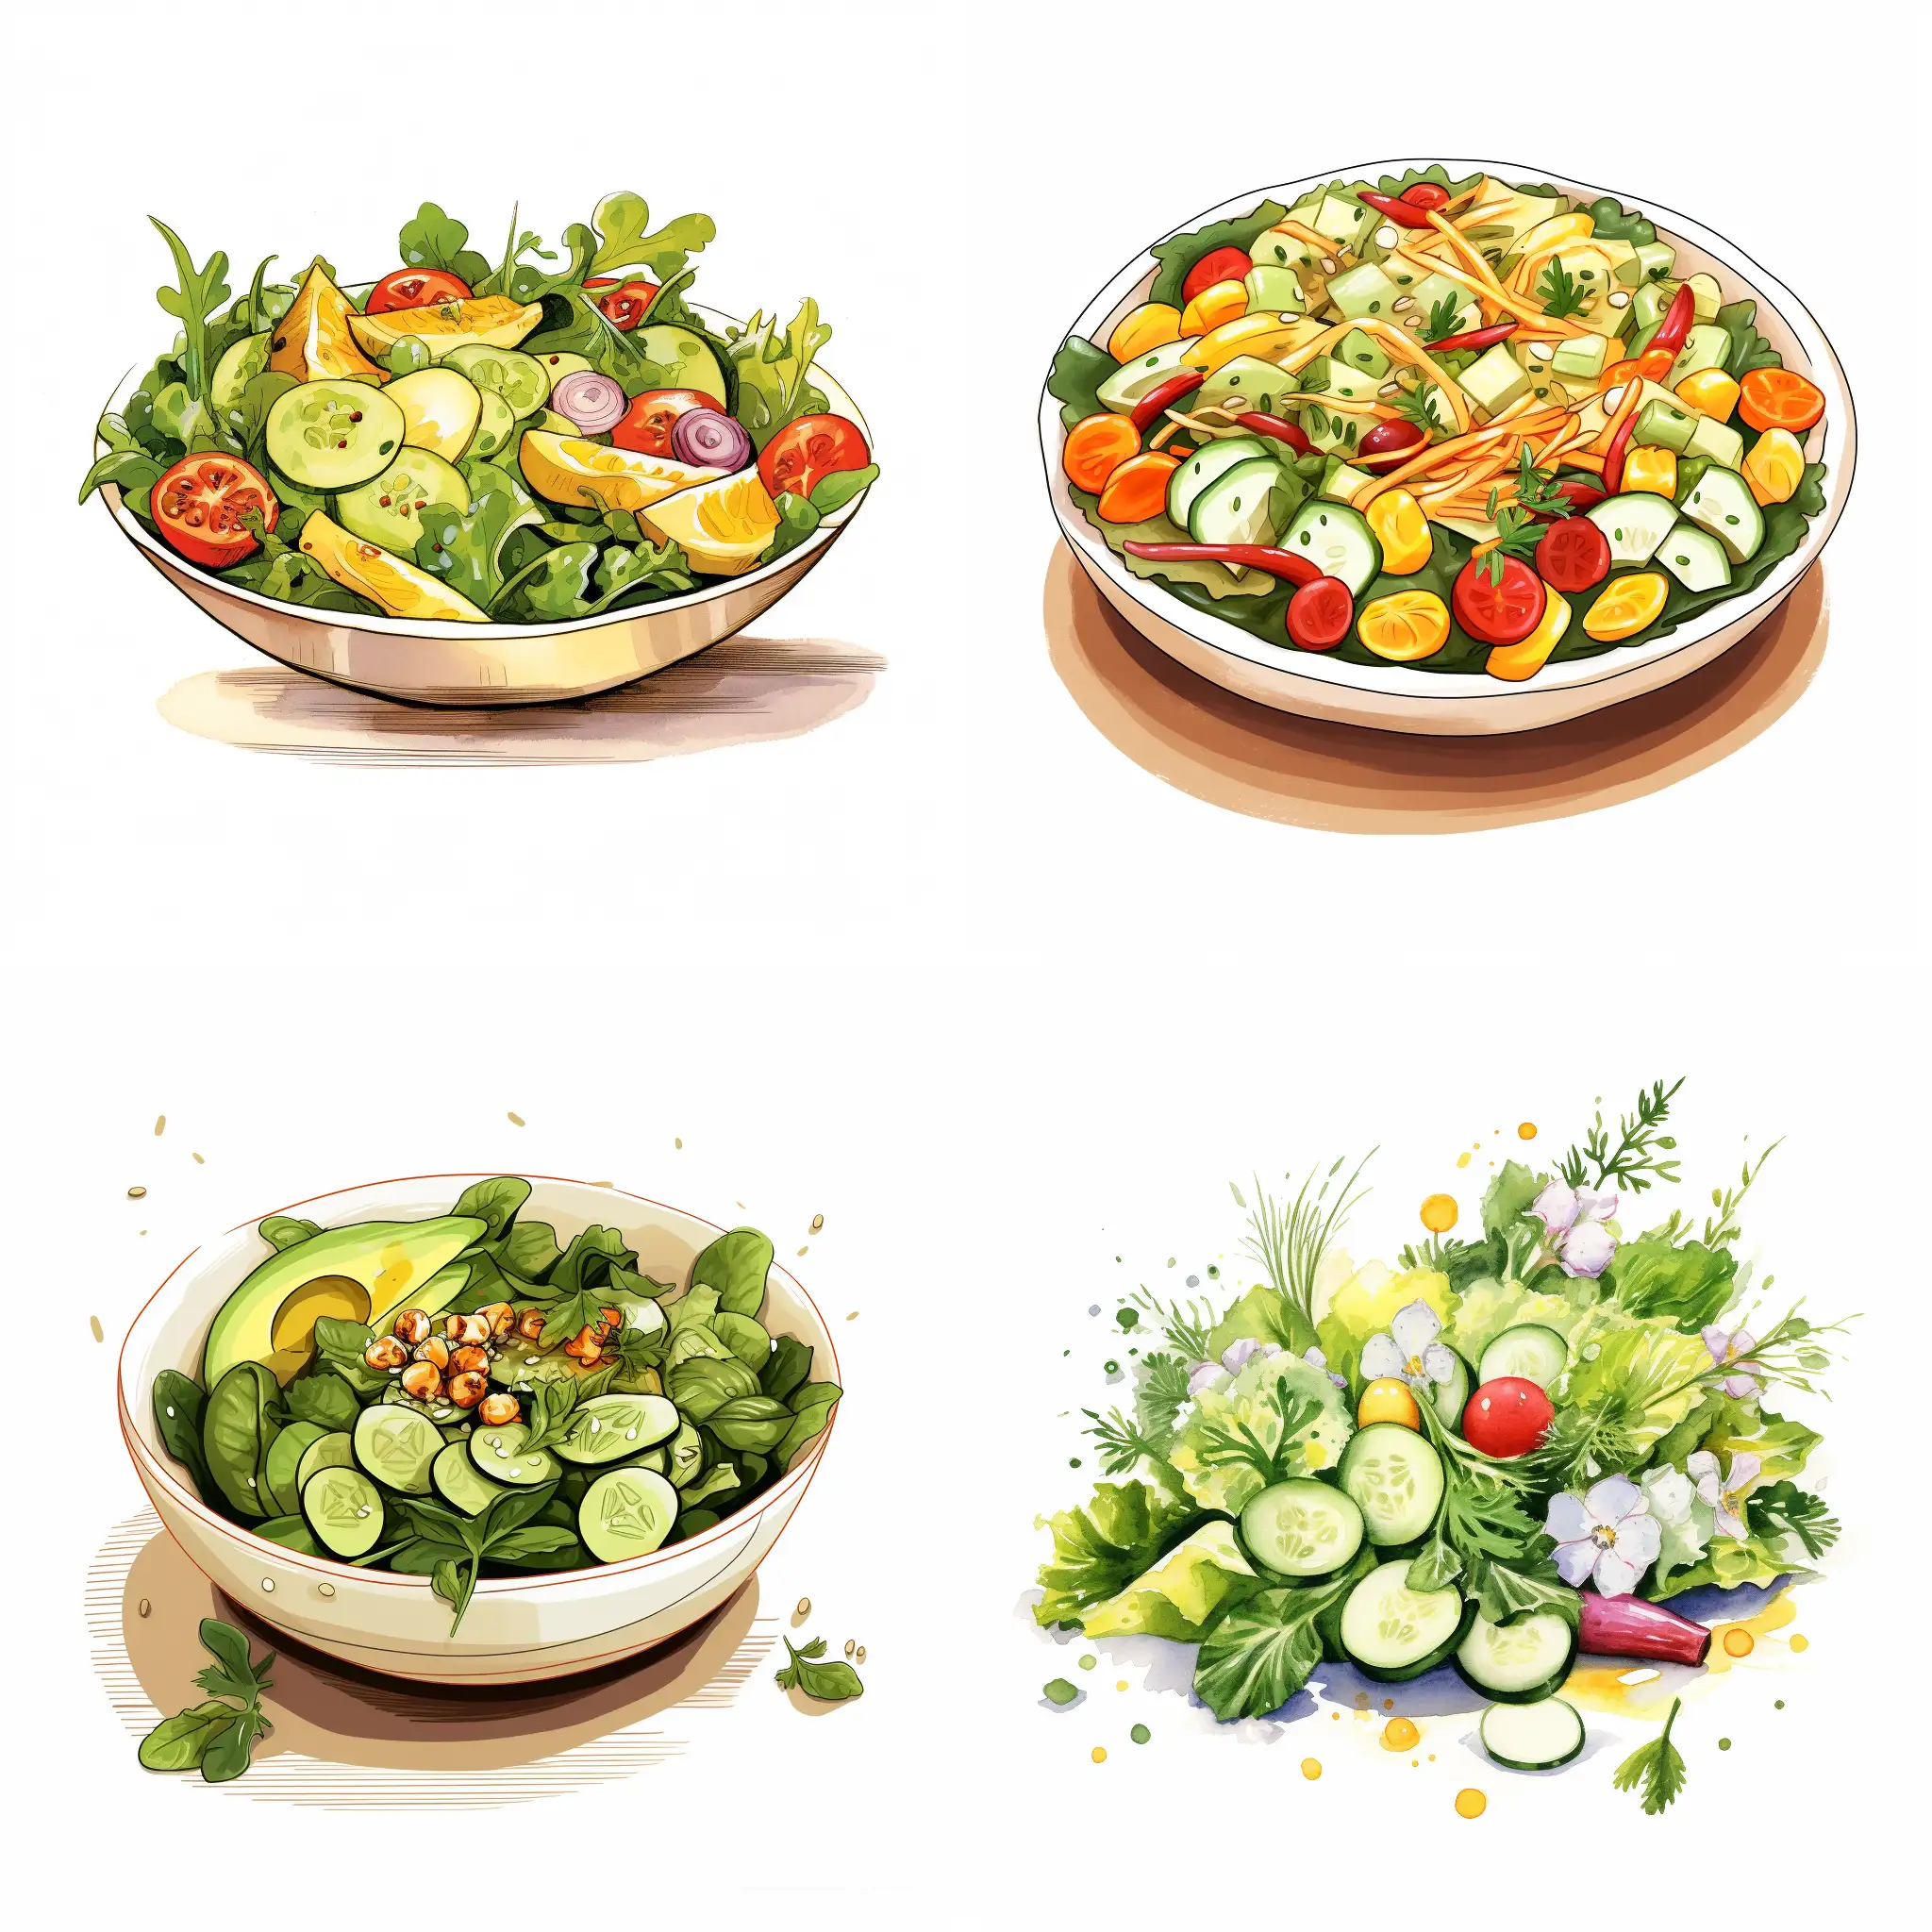 Minimalist-Salad-Illustration-on-White-Background